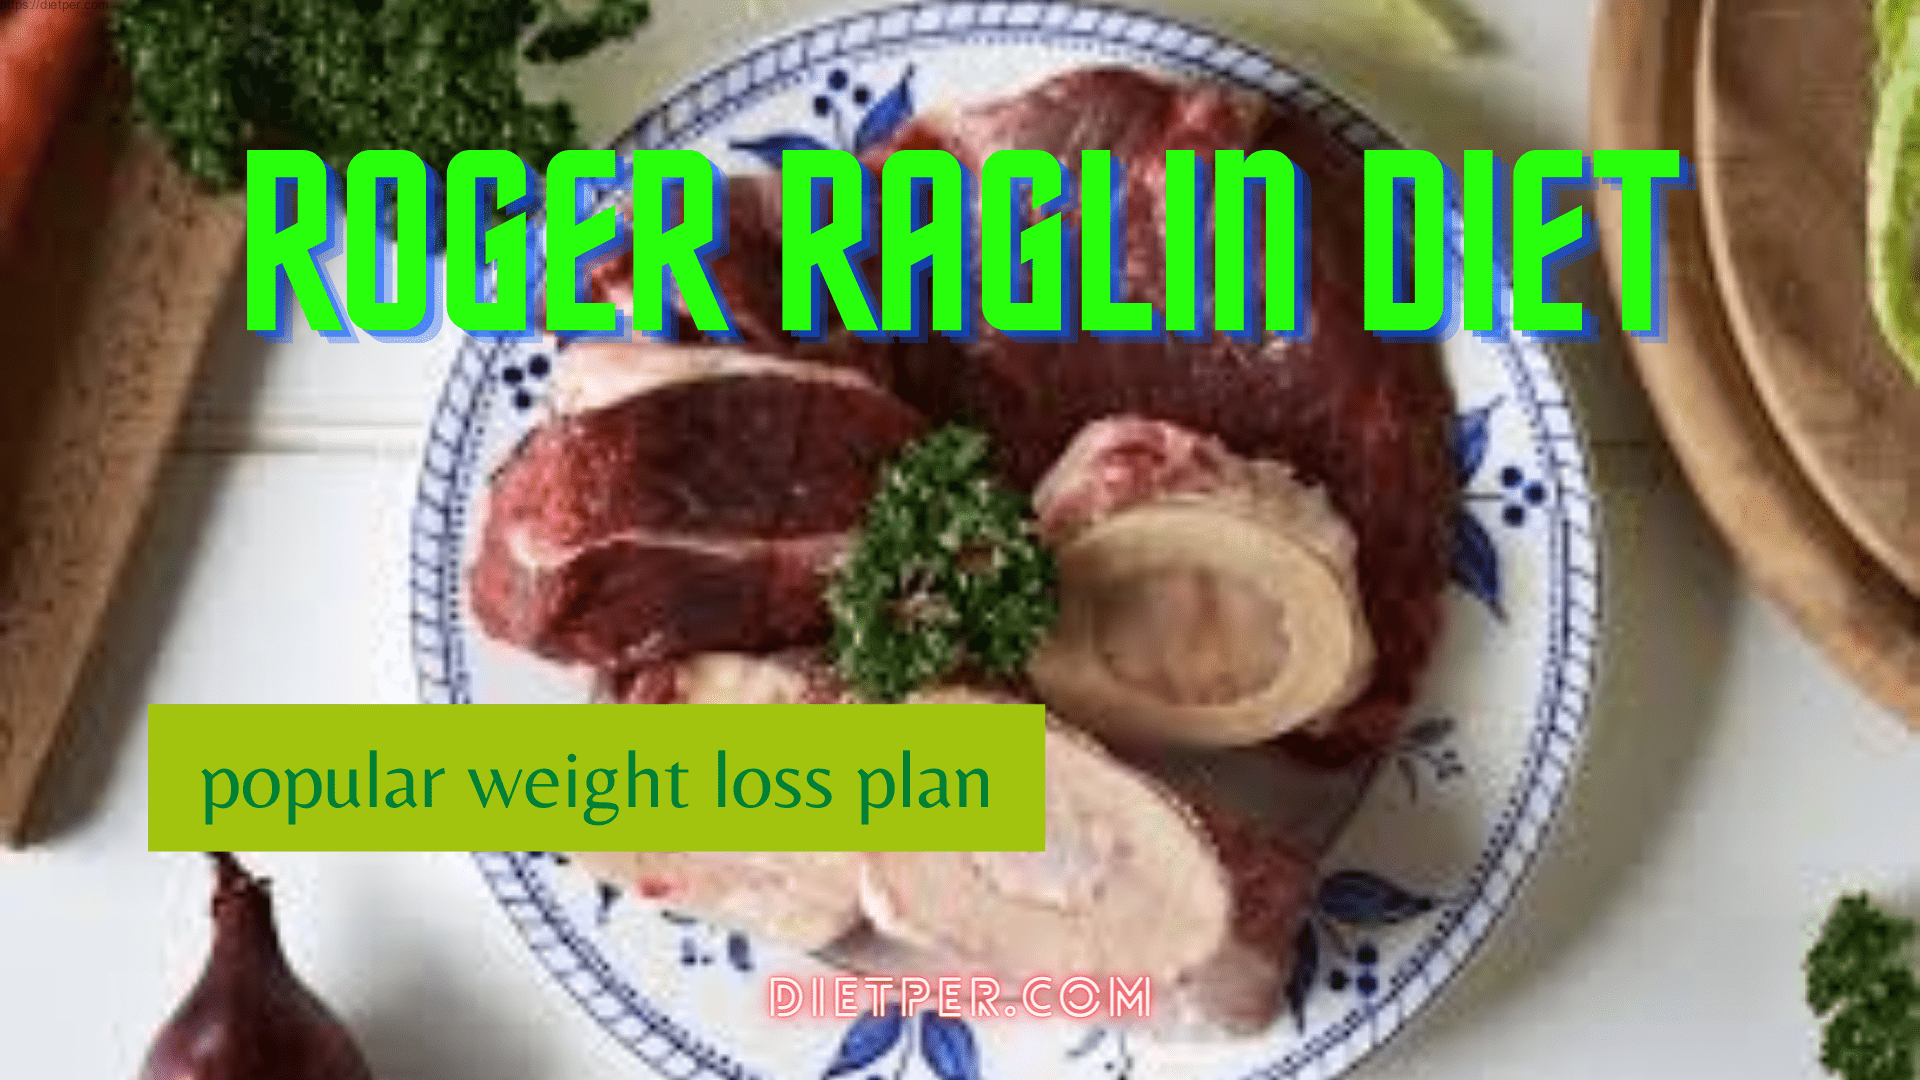 The Roger Raglin Diet